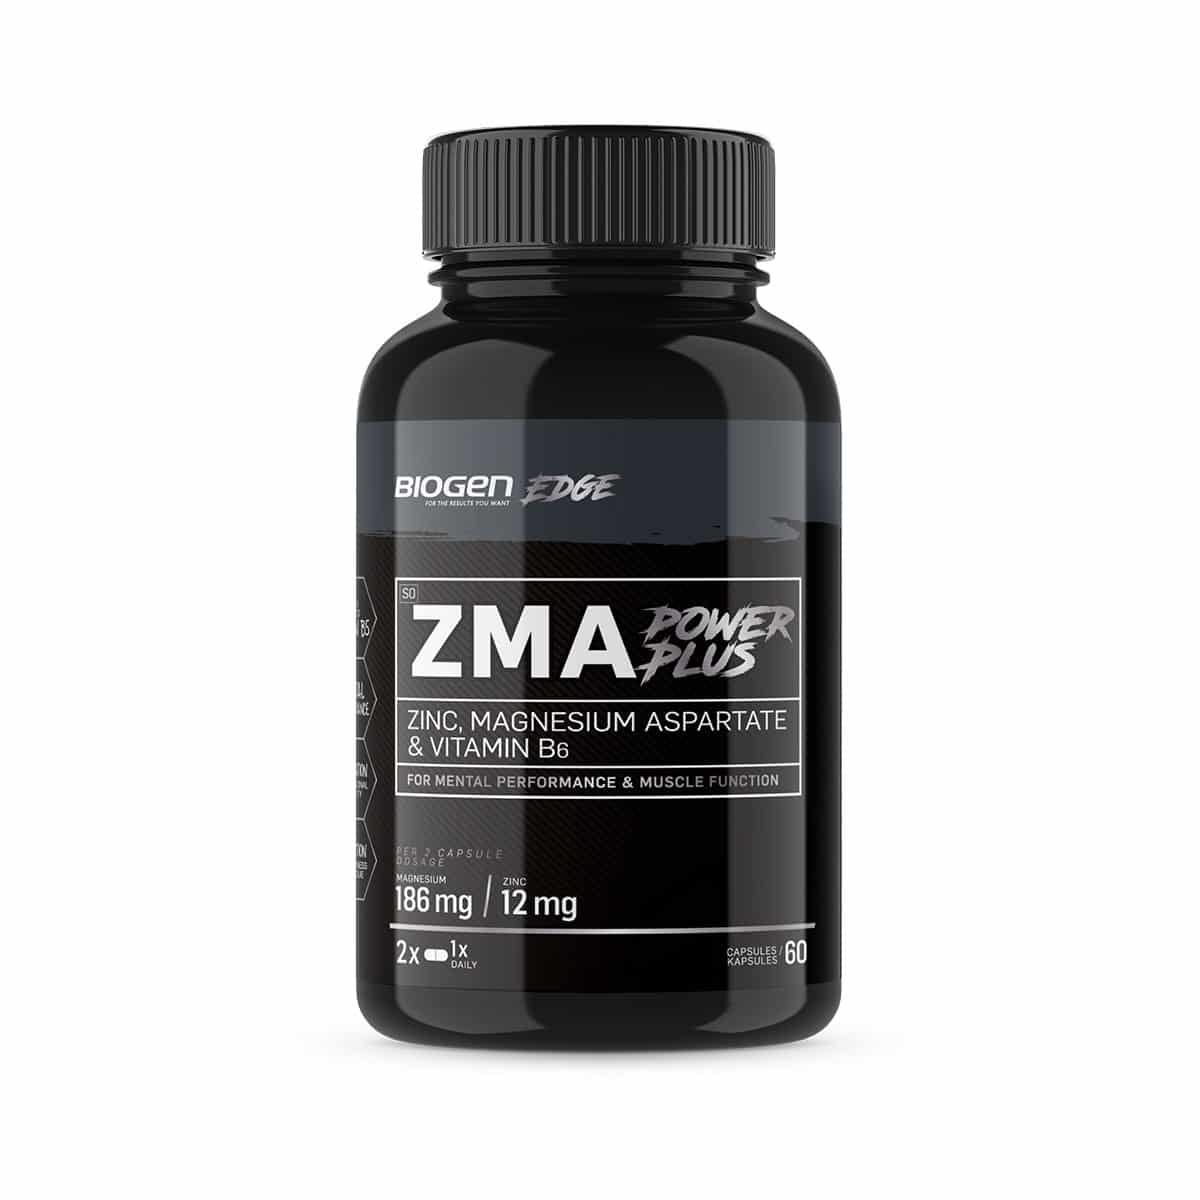 Biogen ZMA Power Plus - 60s